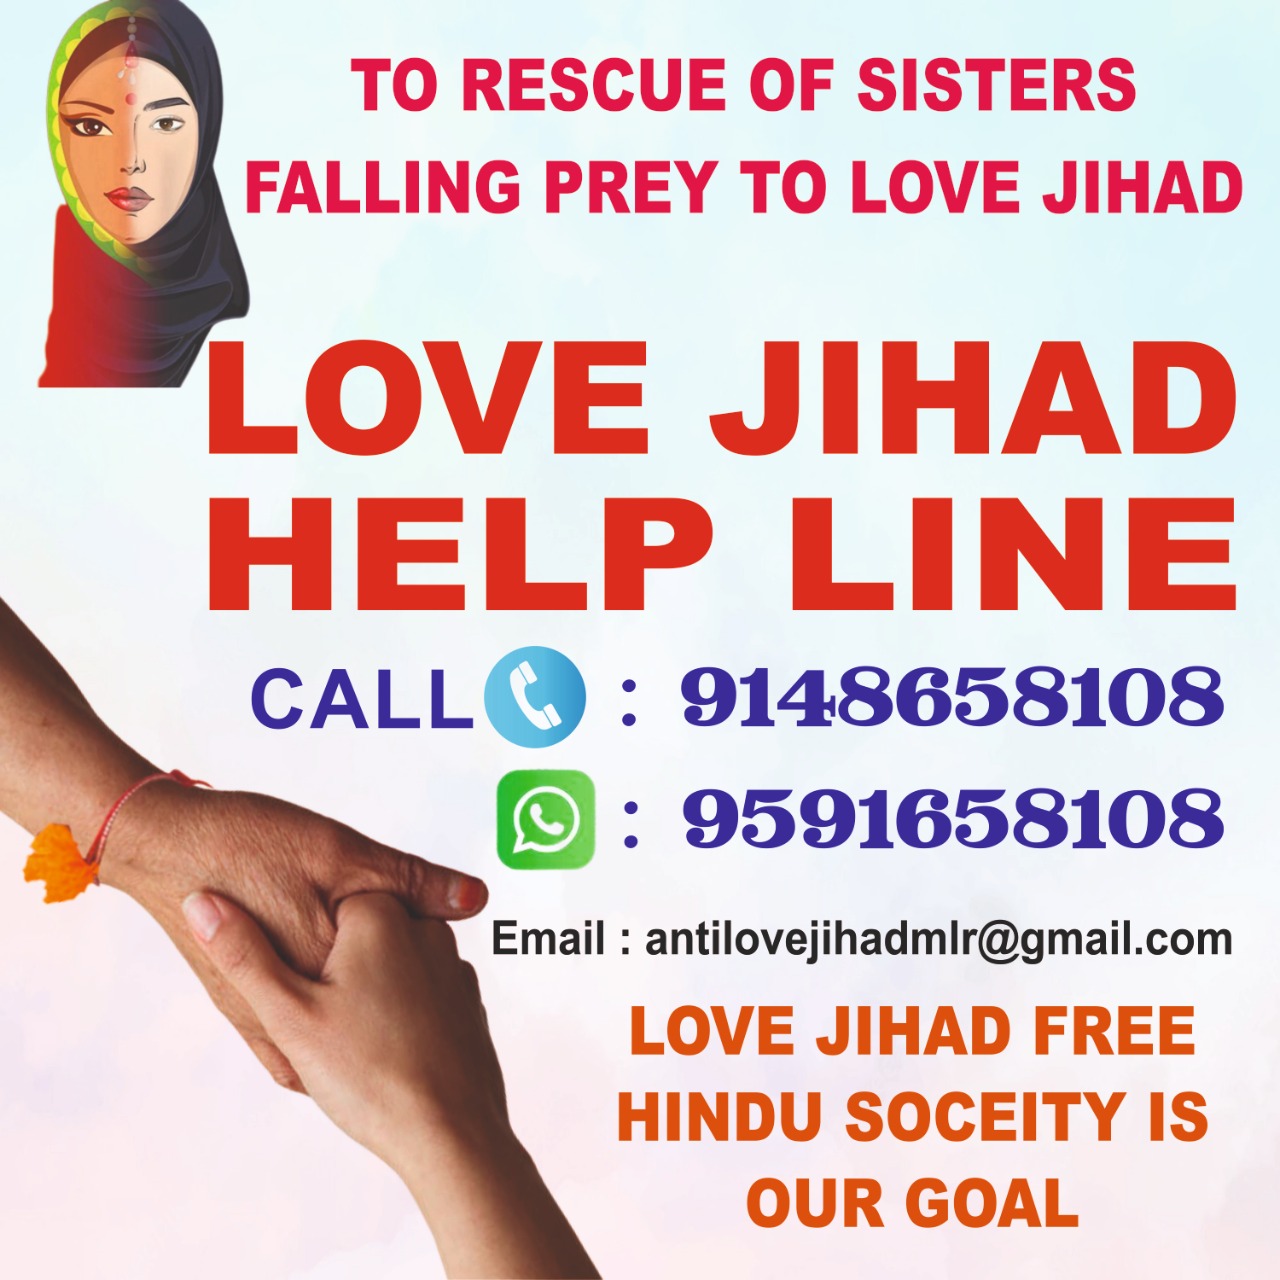 VHP, Bajrang Dal launches ‘Love Jihad helpline’ for girls in Karnataka